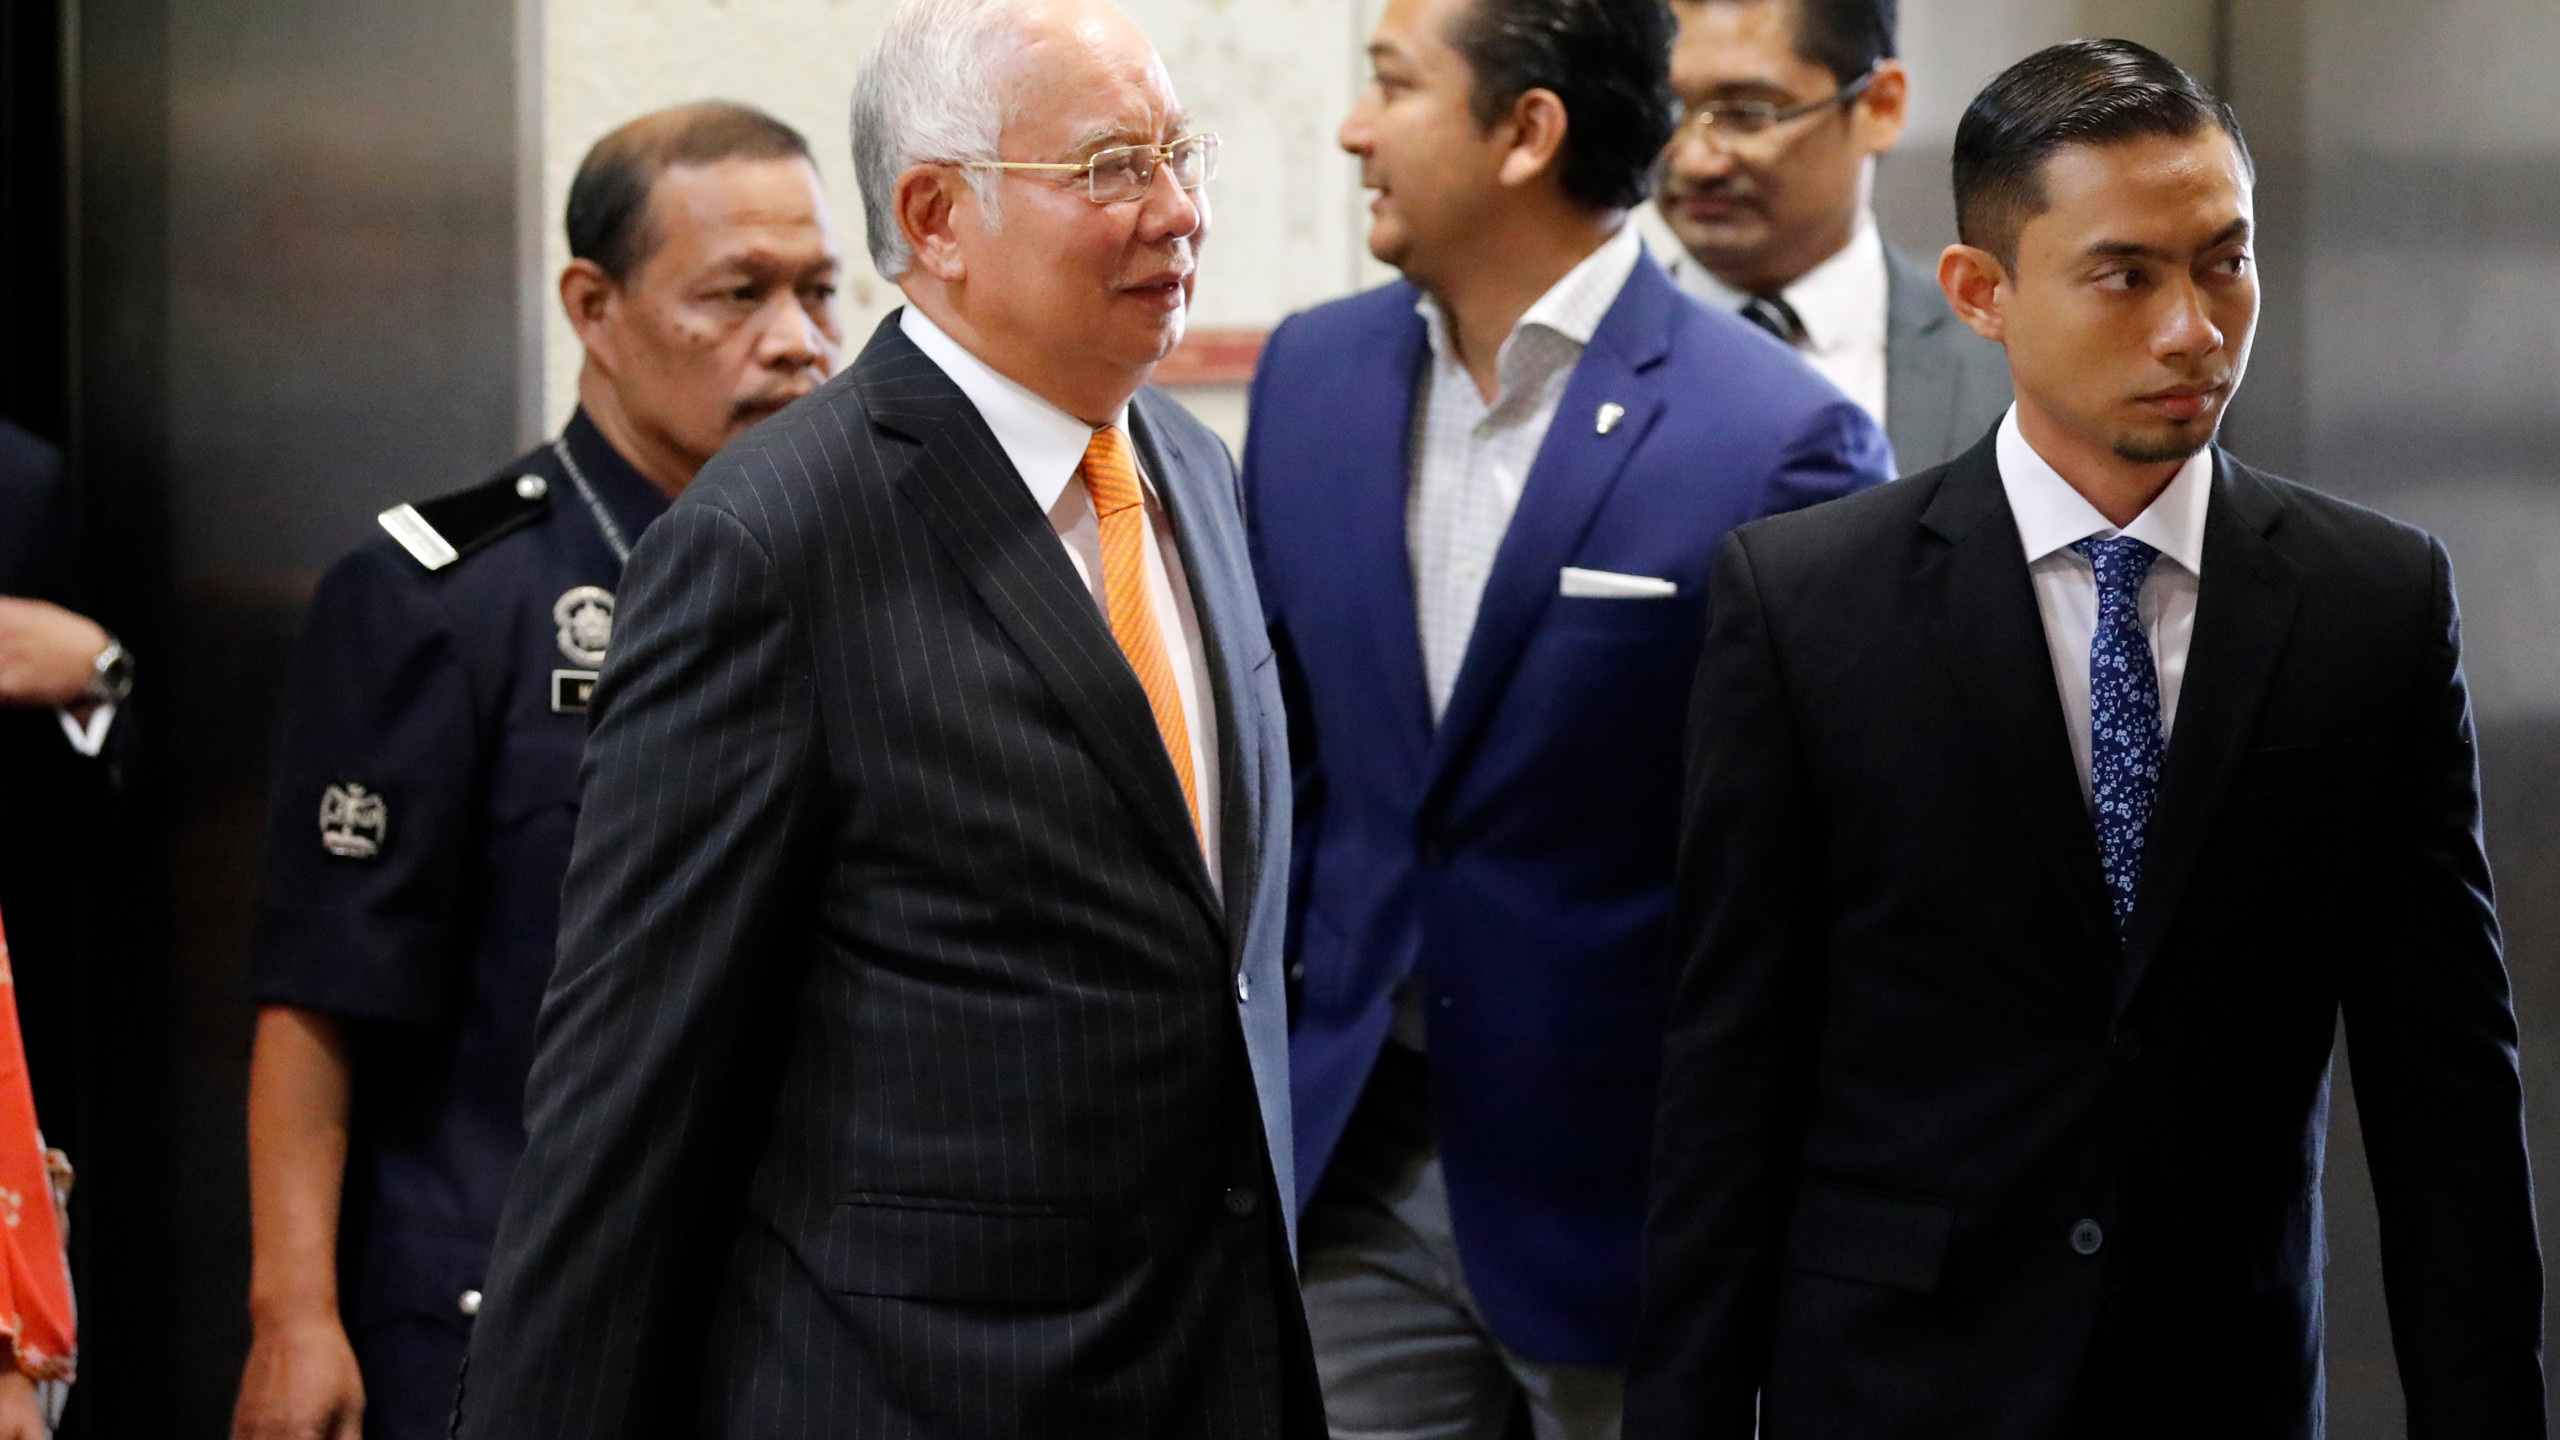 Mantan Perdana Menteri Malaysia Najib Razak, di Pengadilan Tinggi Mlaaysia. (Foto: Ist)